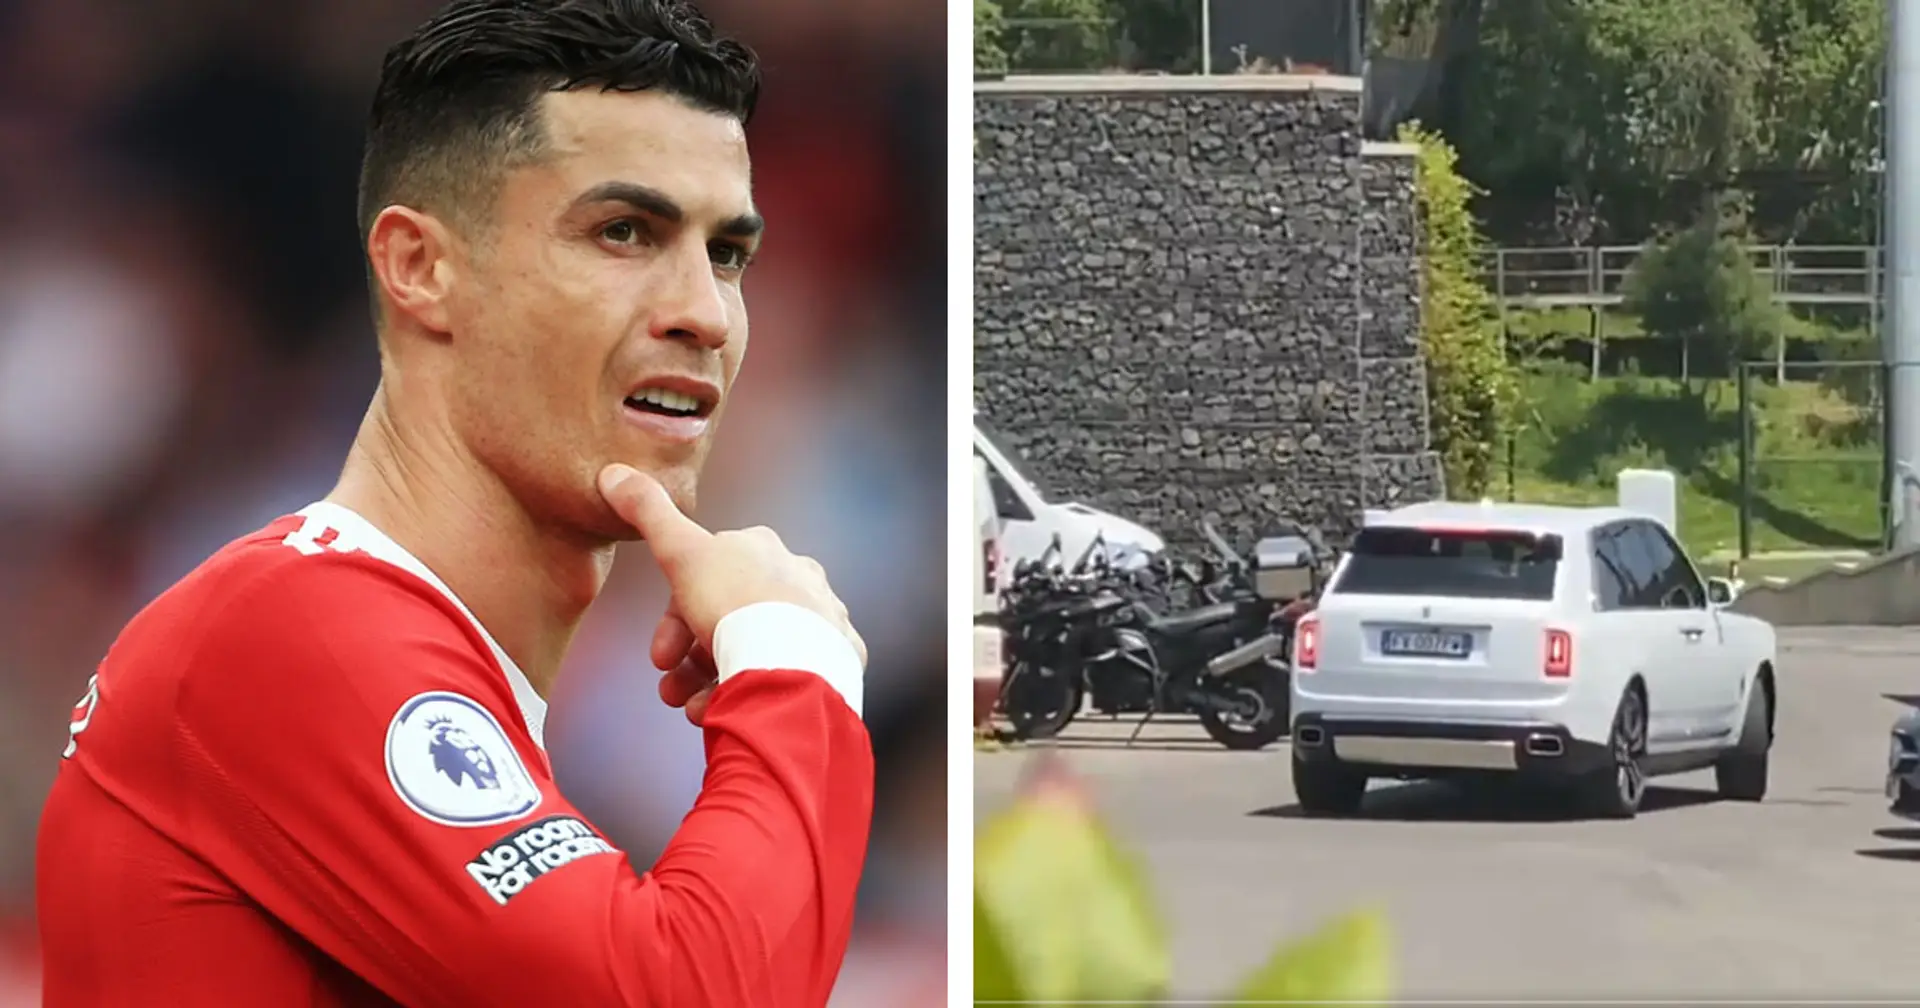 Ronaldo trains at Portugal national team training ground after missing United pre-season return